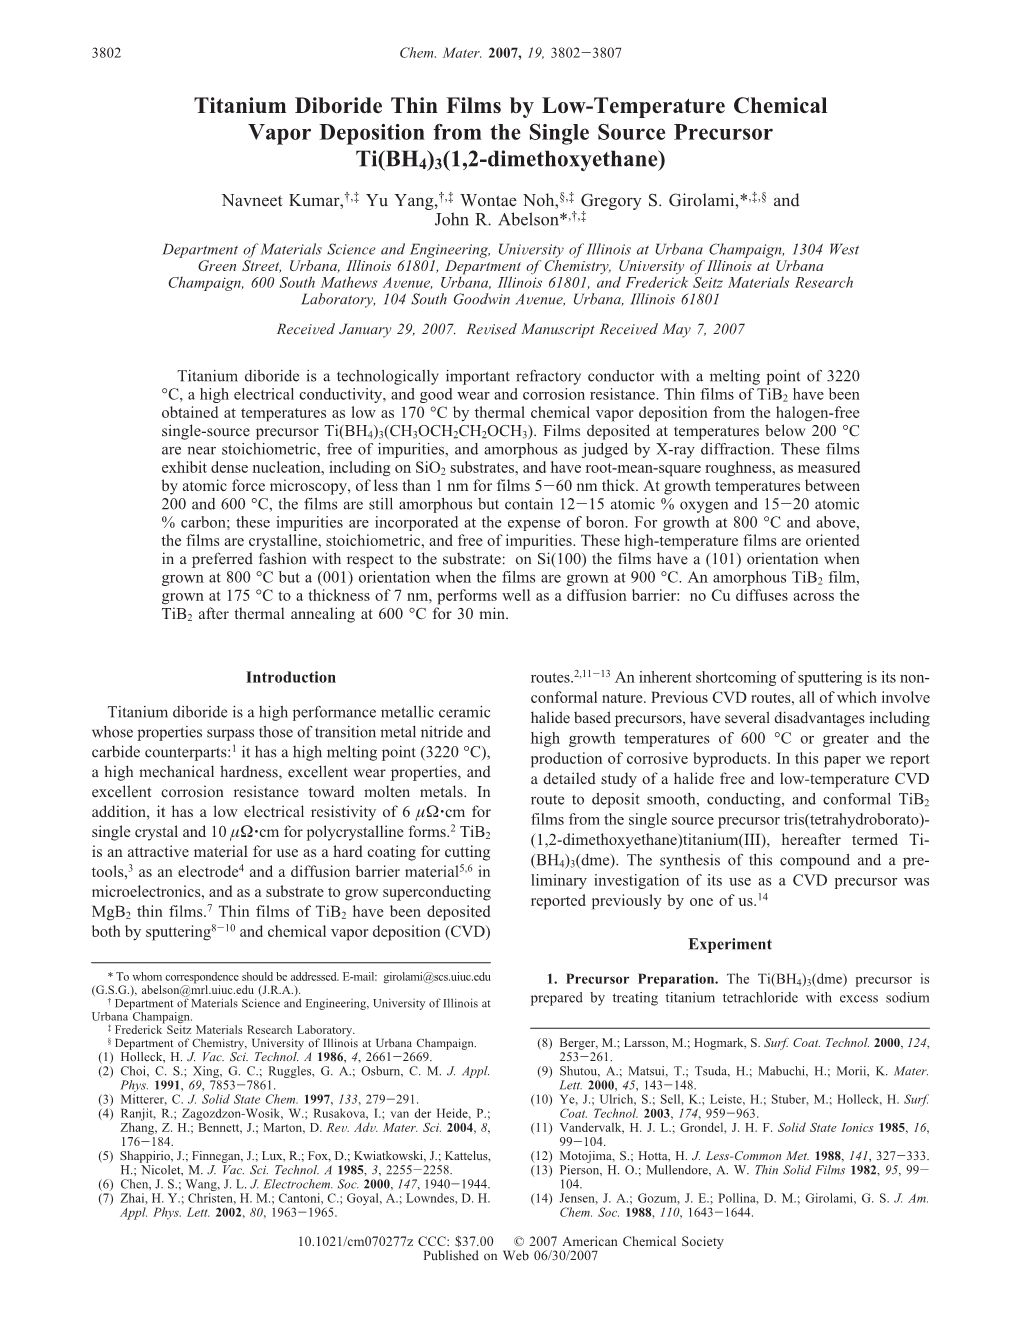 Titanium Diboride Thin Films by Low-Temperature Chemical Vapor Deposition from the Single Source Precursor Ti(BH4)3(1,2-Dimethoxyethane)